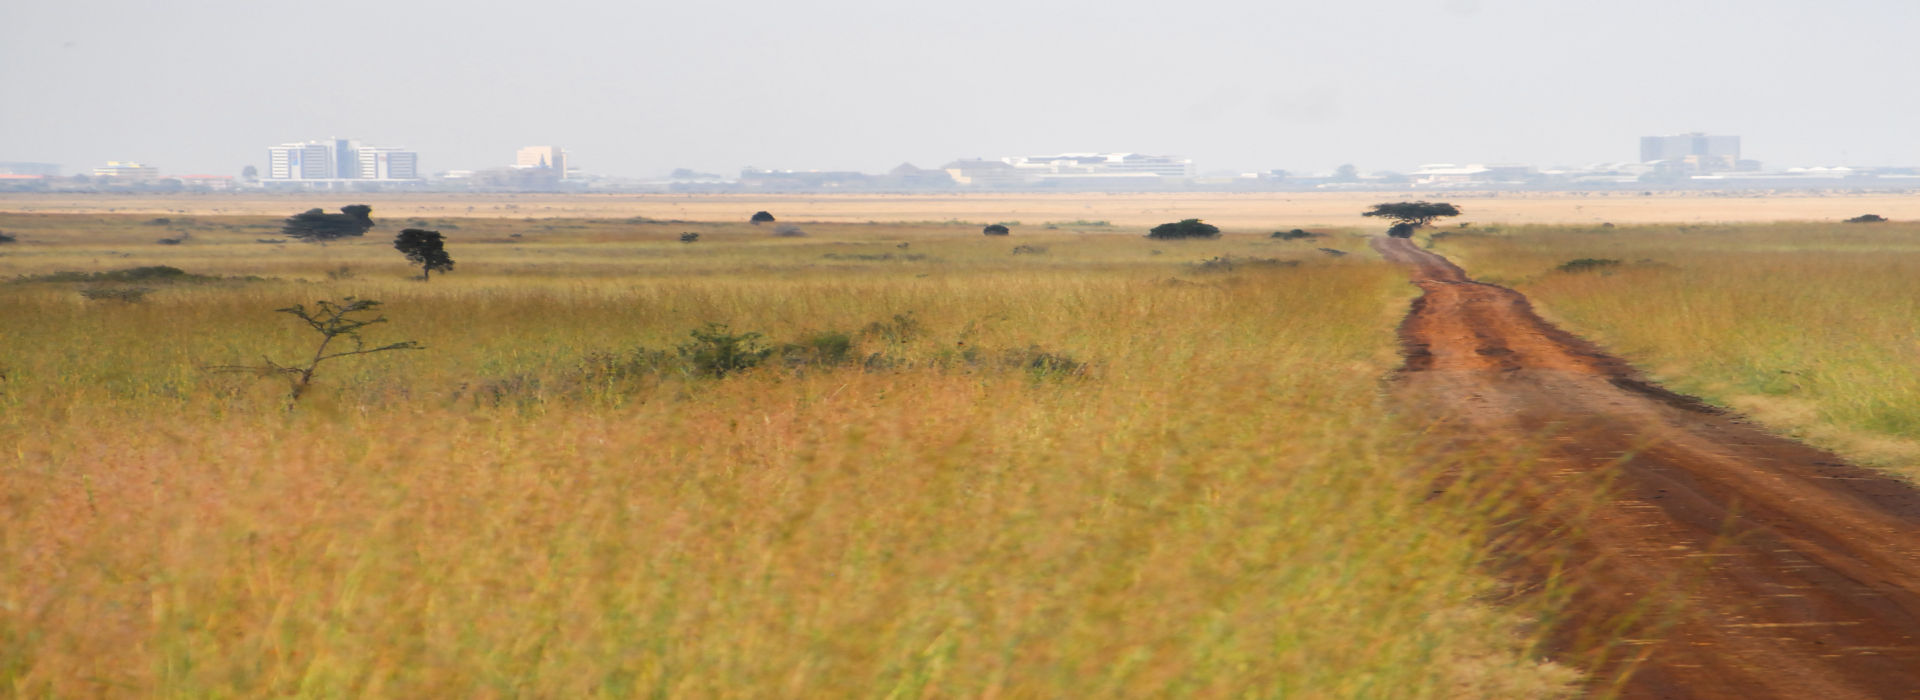 Background Image for Nairobi National Park